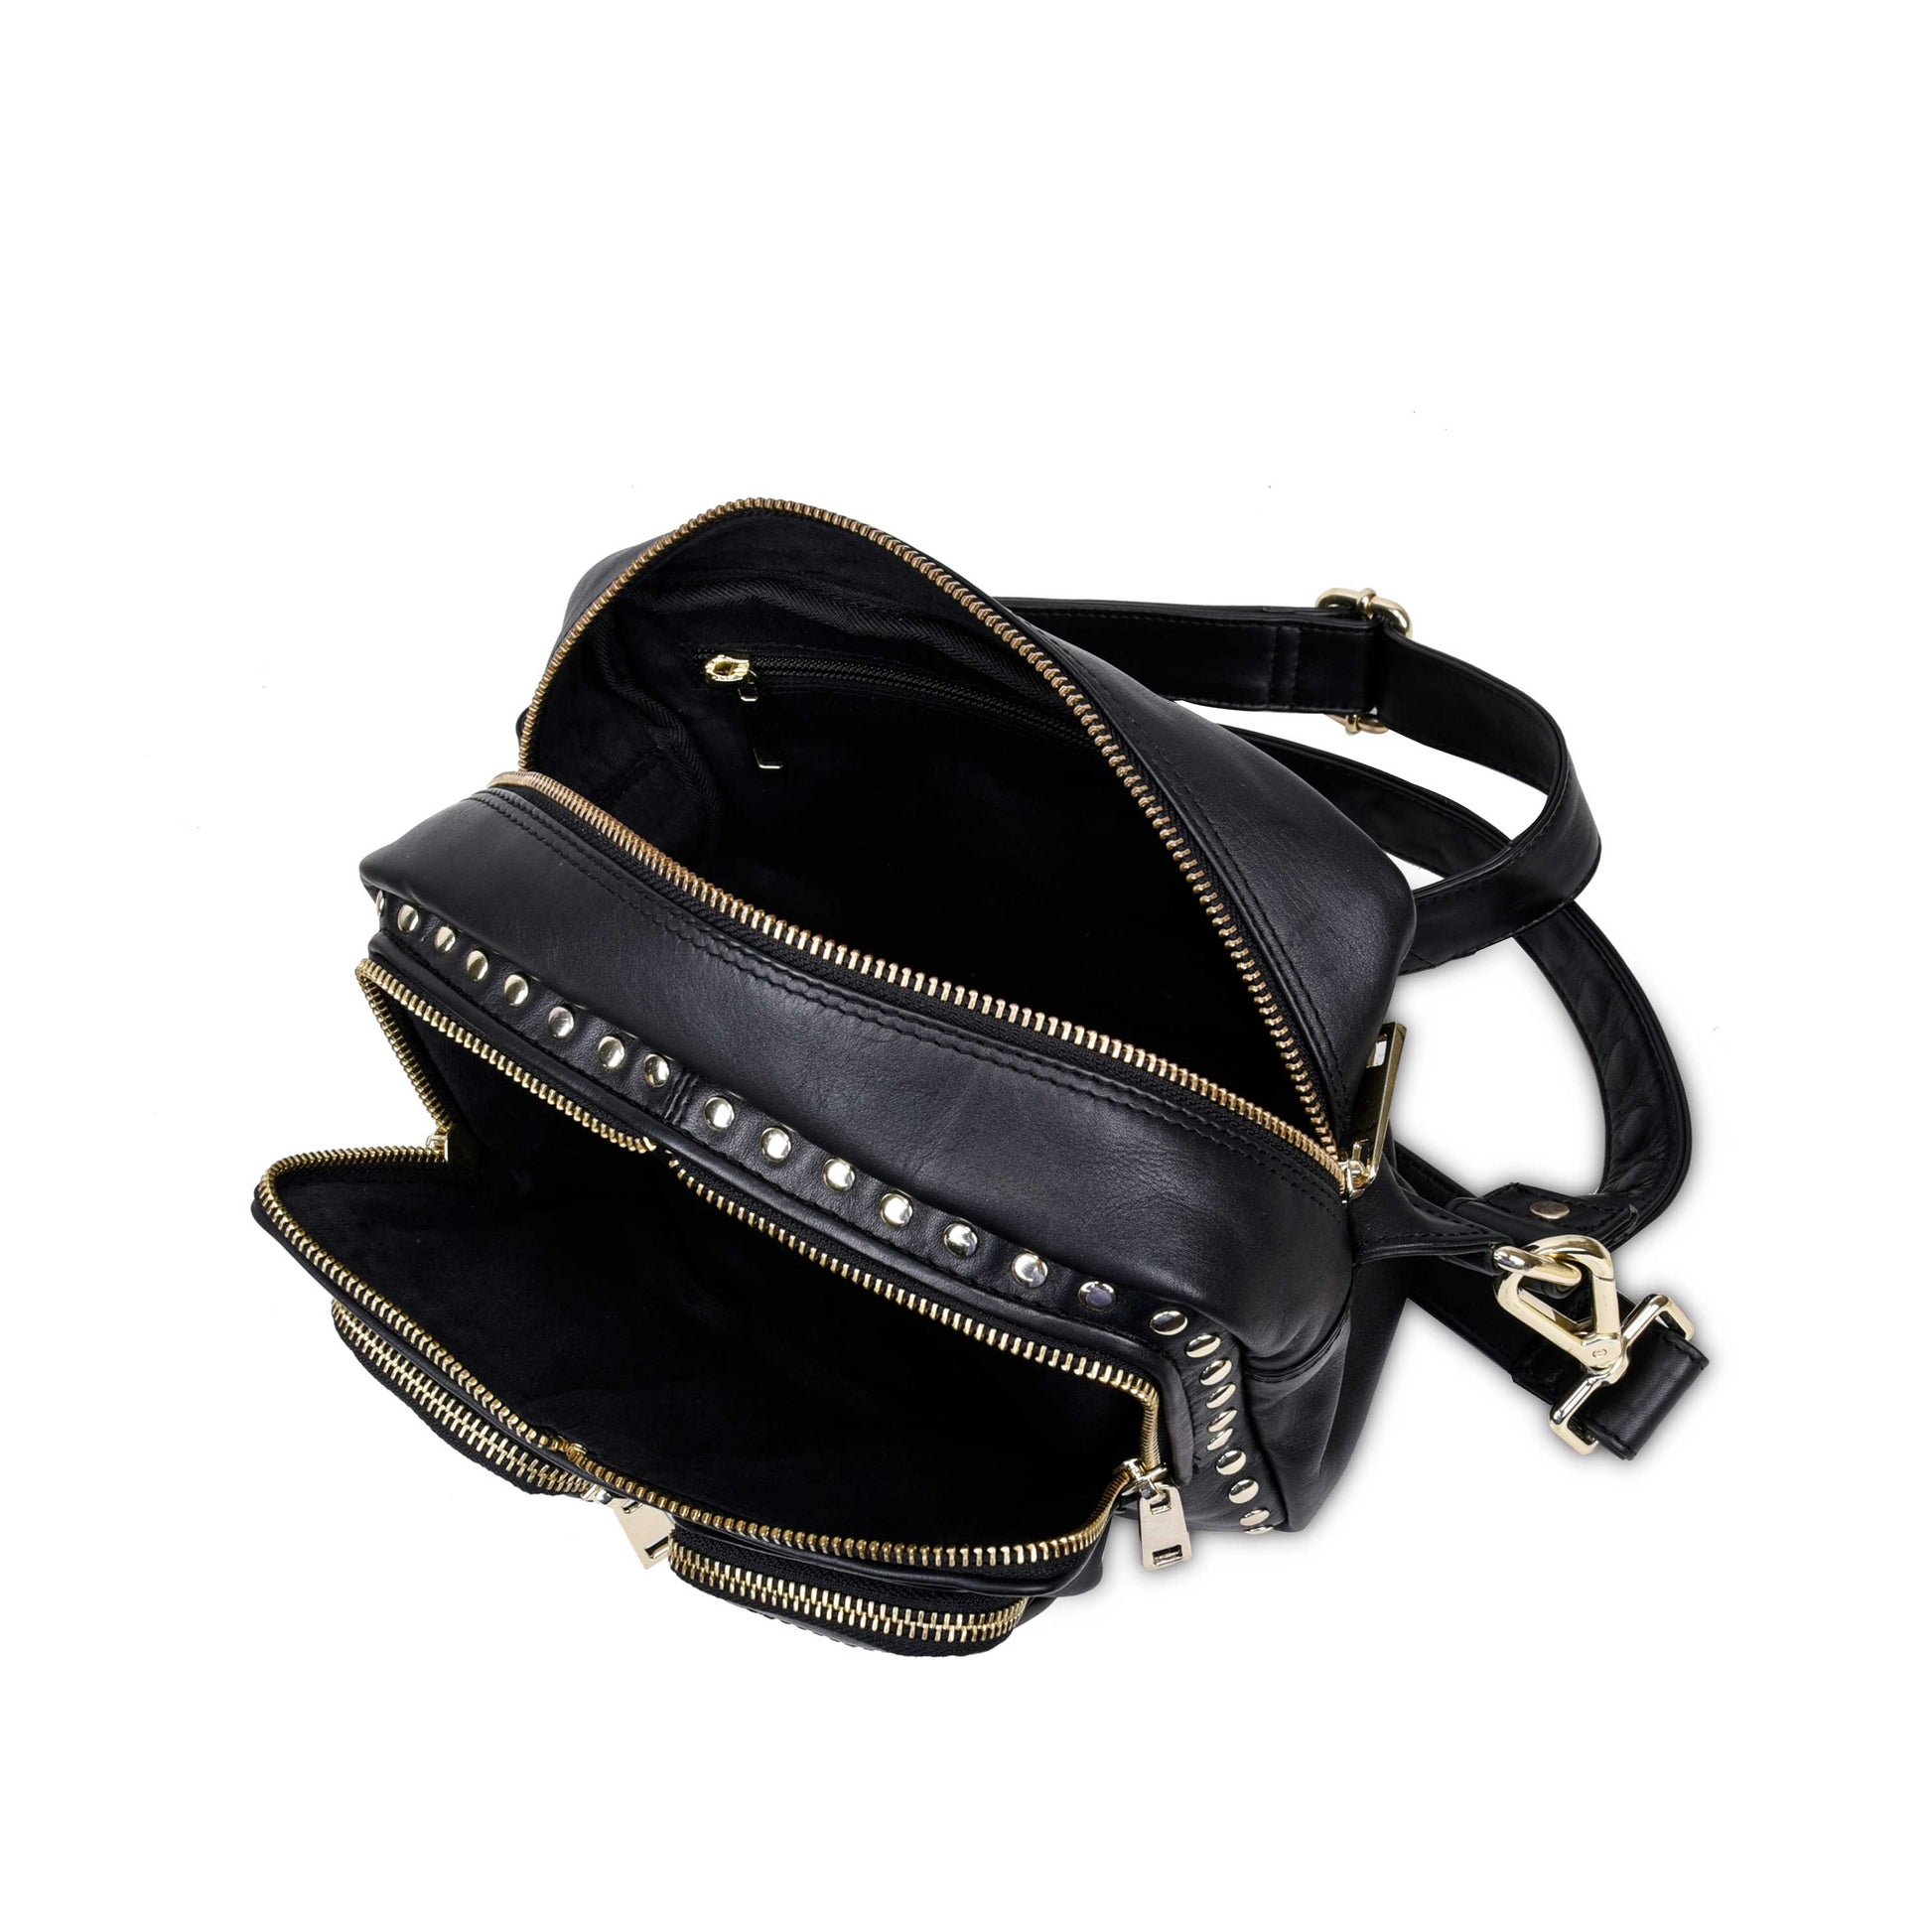 Pure: The Timeless Black Handbag